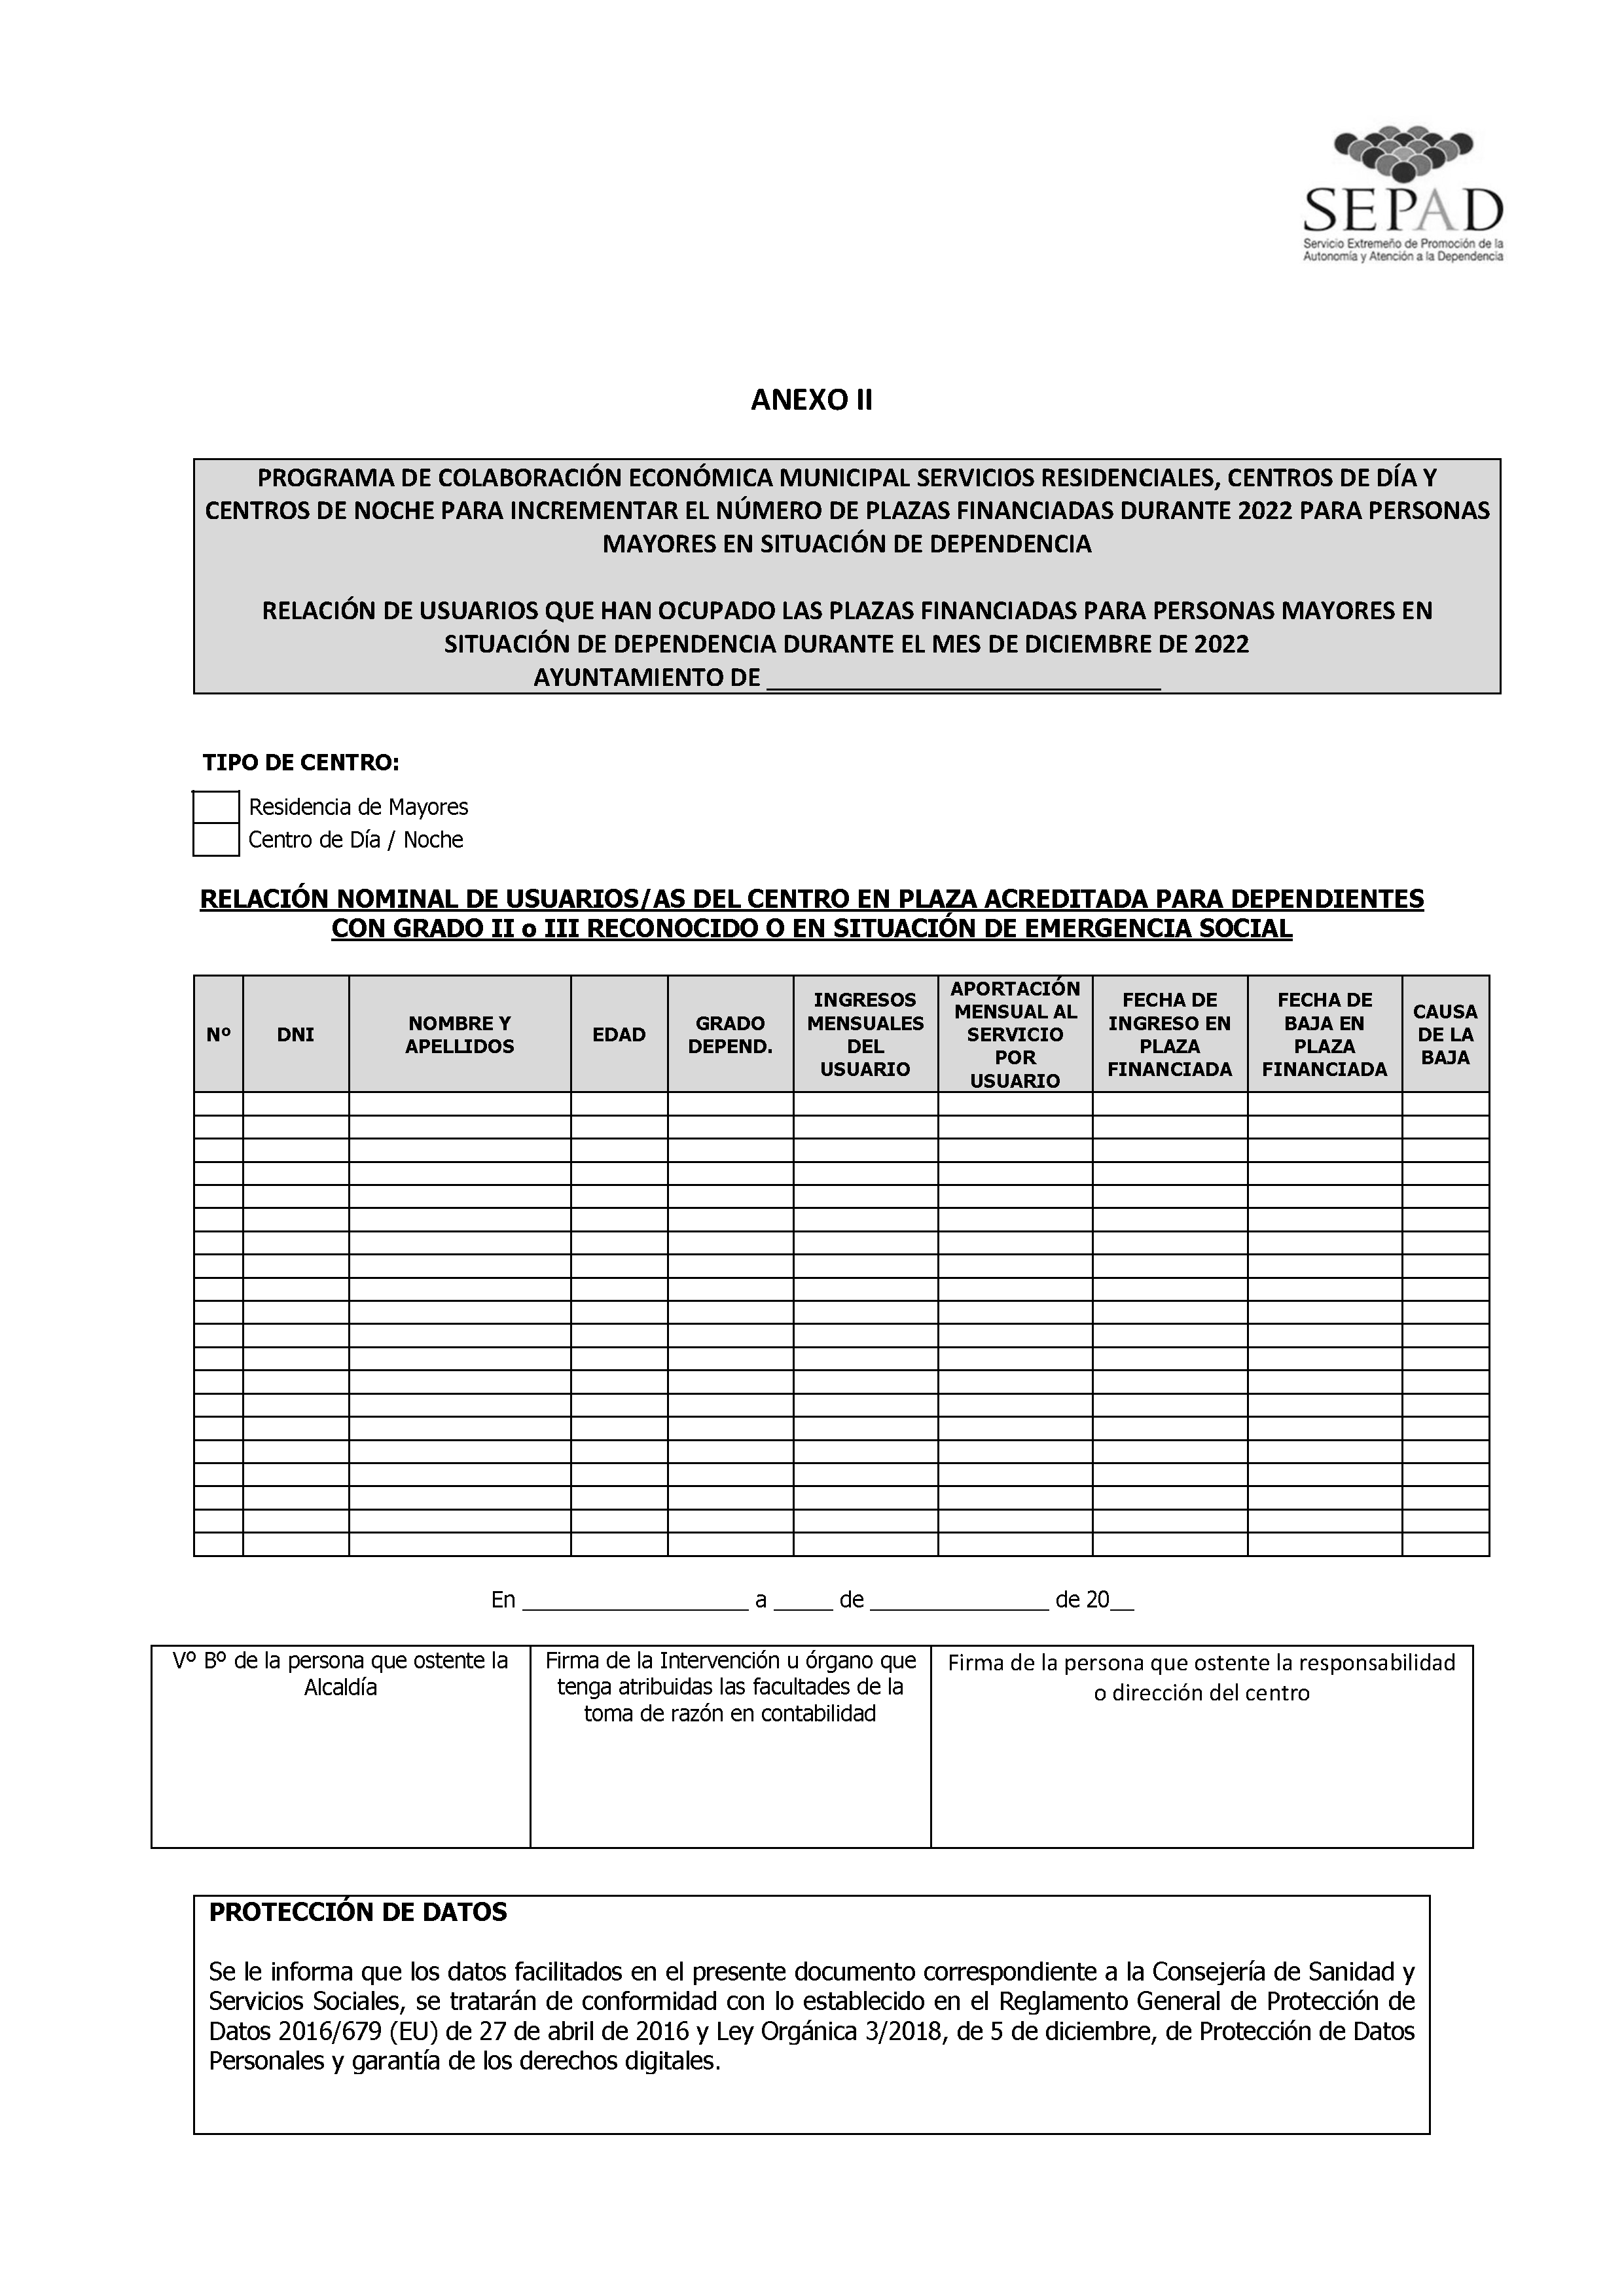 ANEXO I - PROGRAMA DE COLABORACION ECONOMICA MUNICIPAL Pag 8